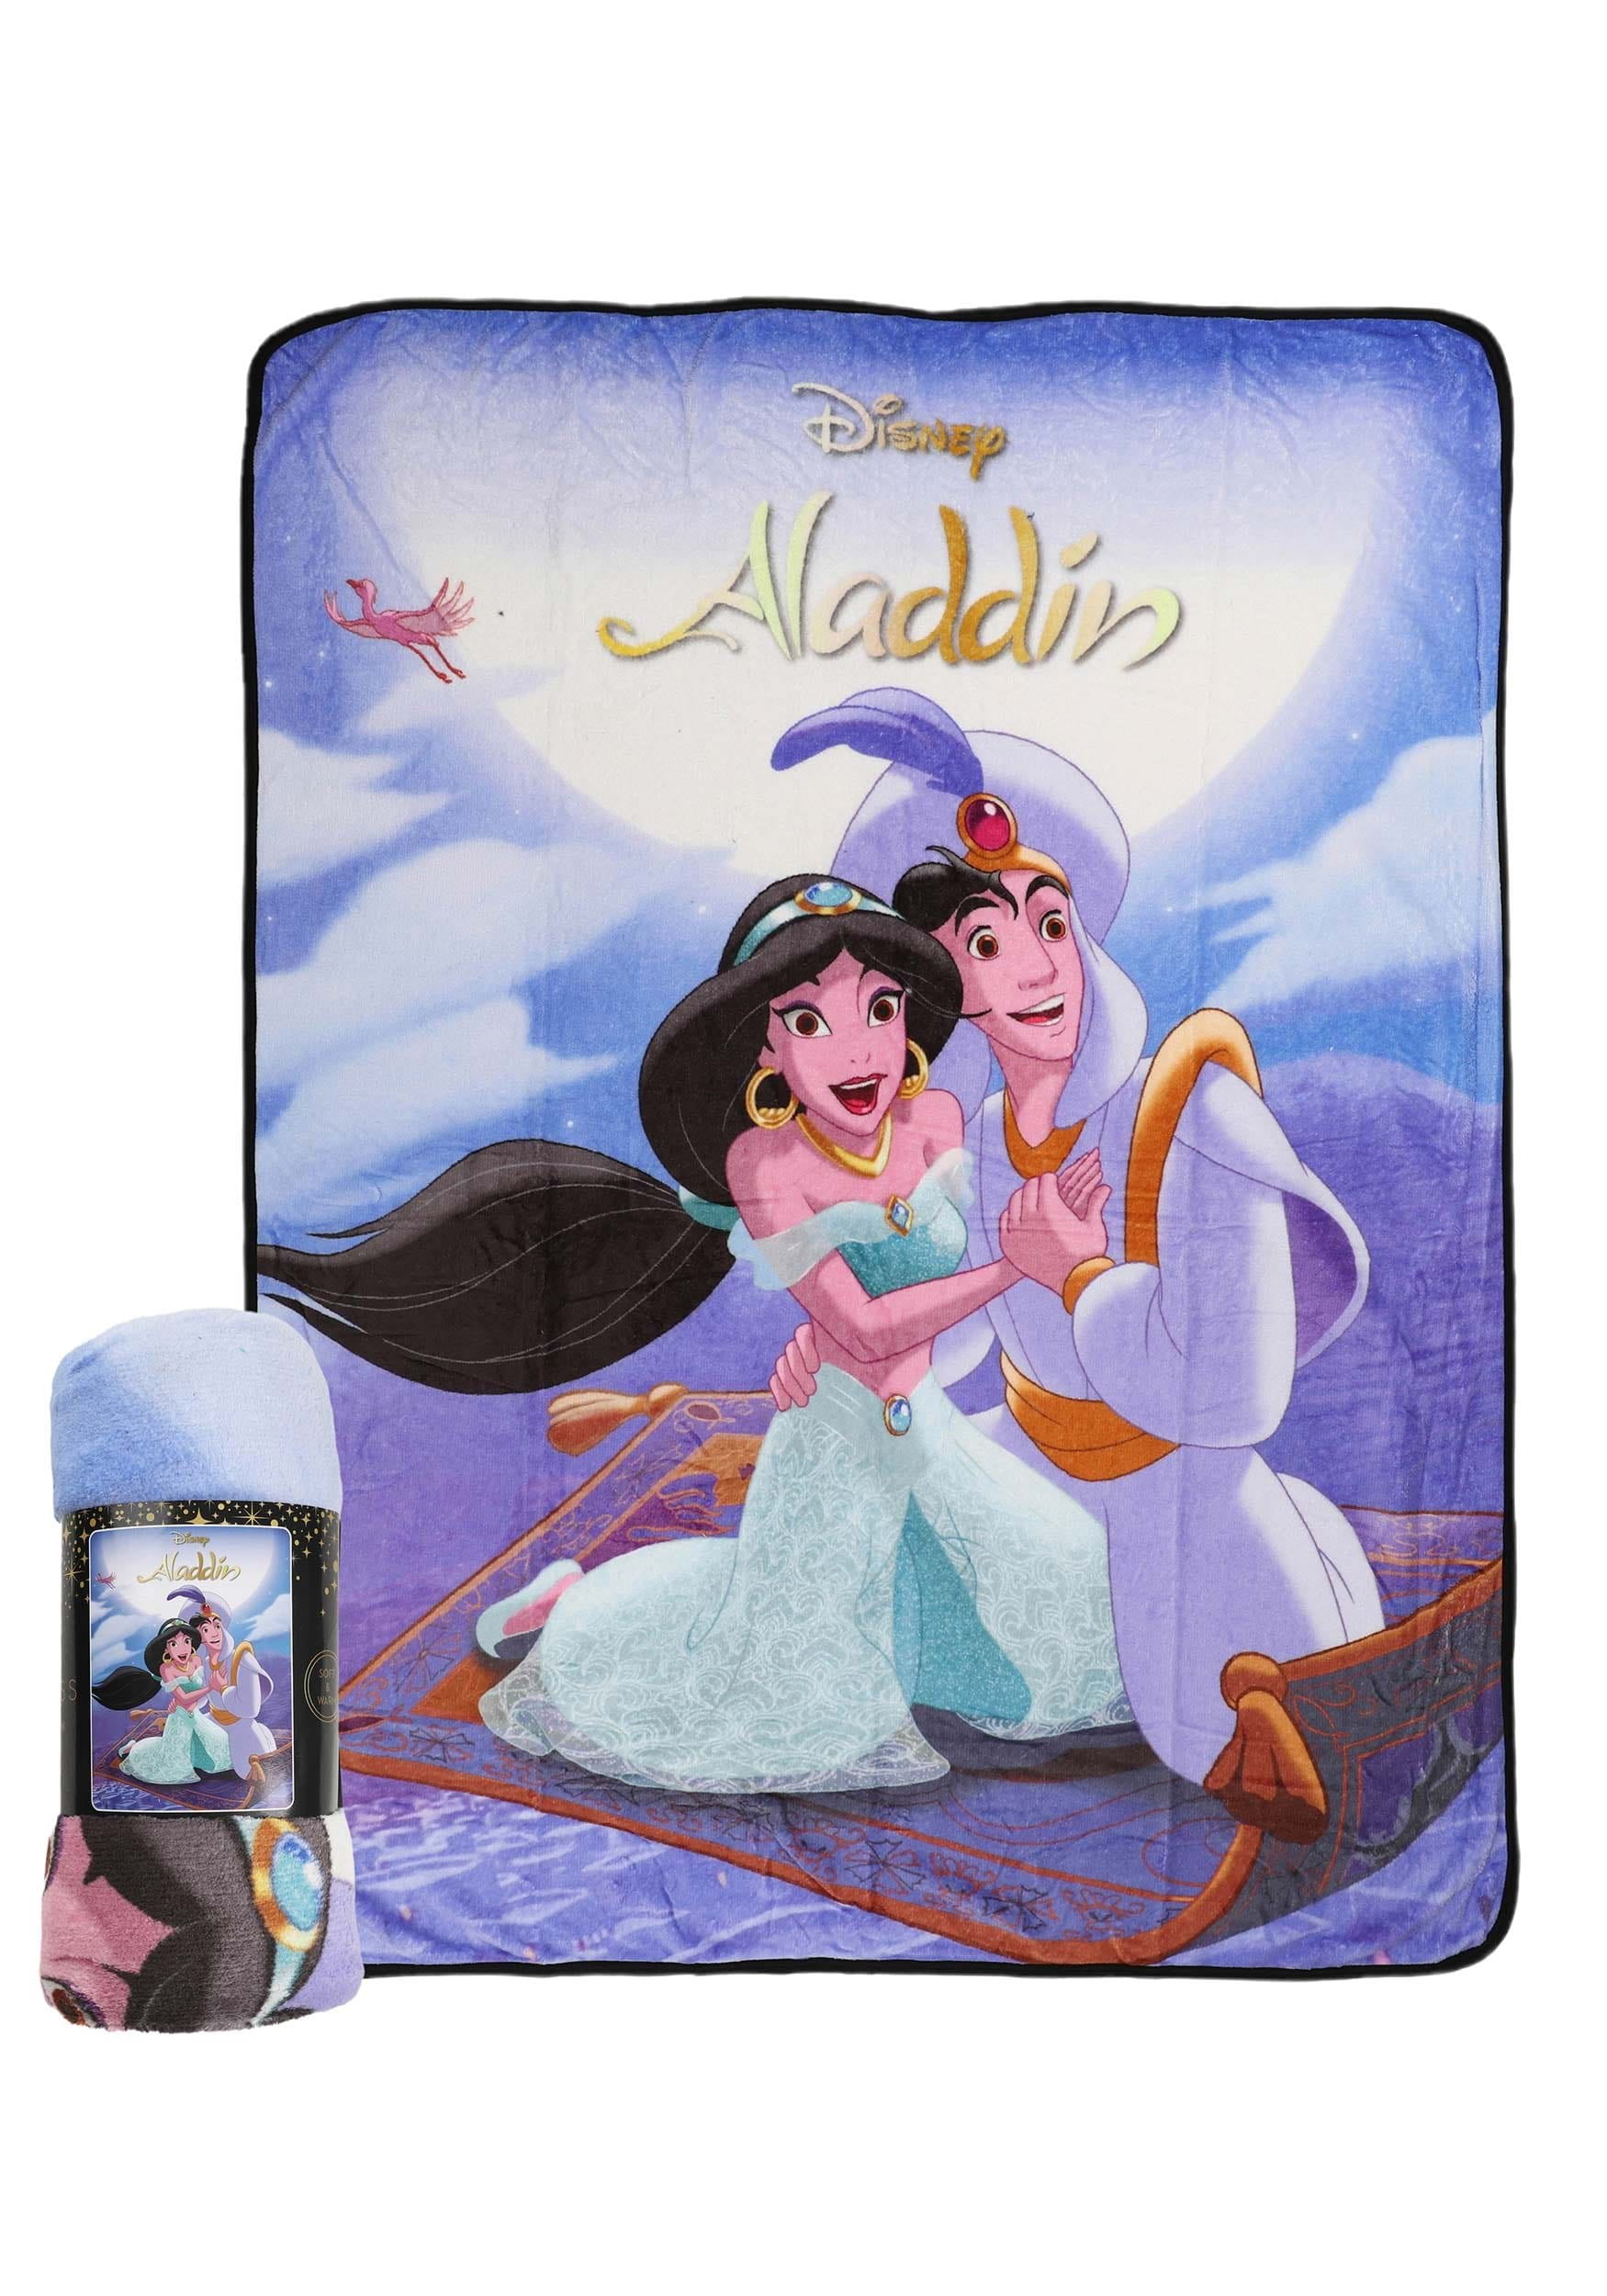 Aladdin Carpet Ride Micro Raschel Throw Blanket Com